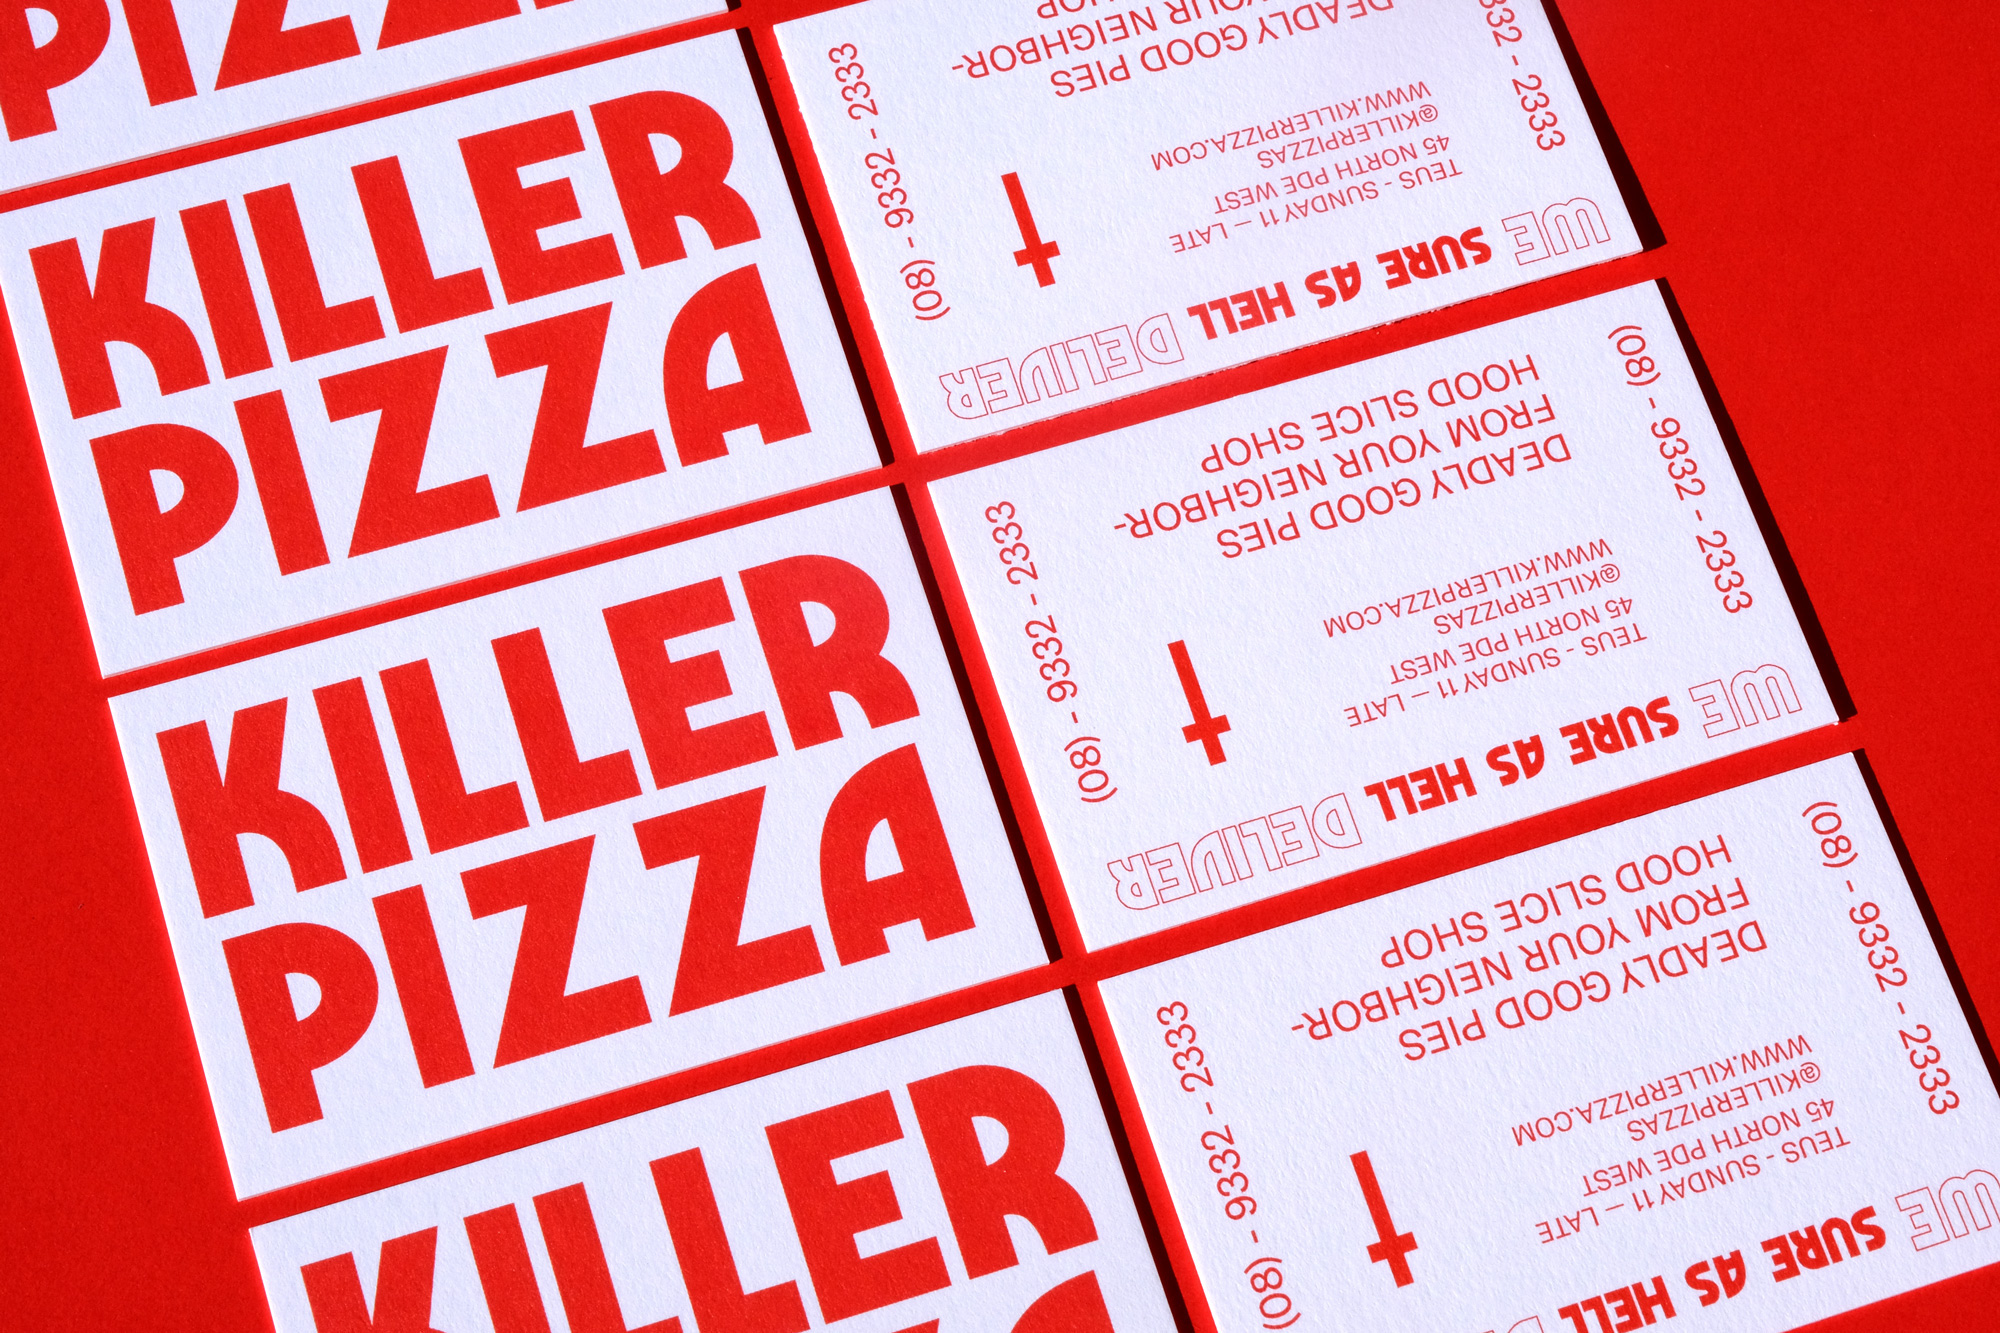 Killer Pizza比萨品牌和包装设计